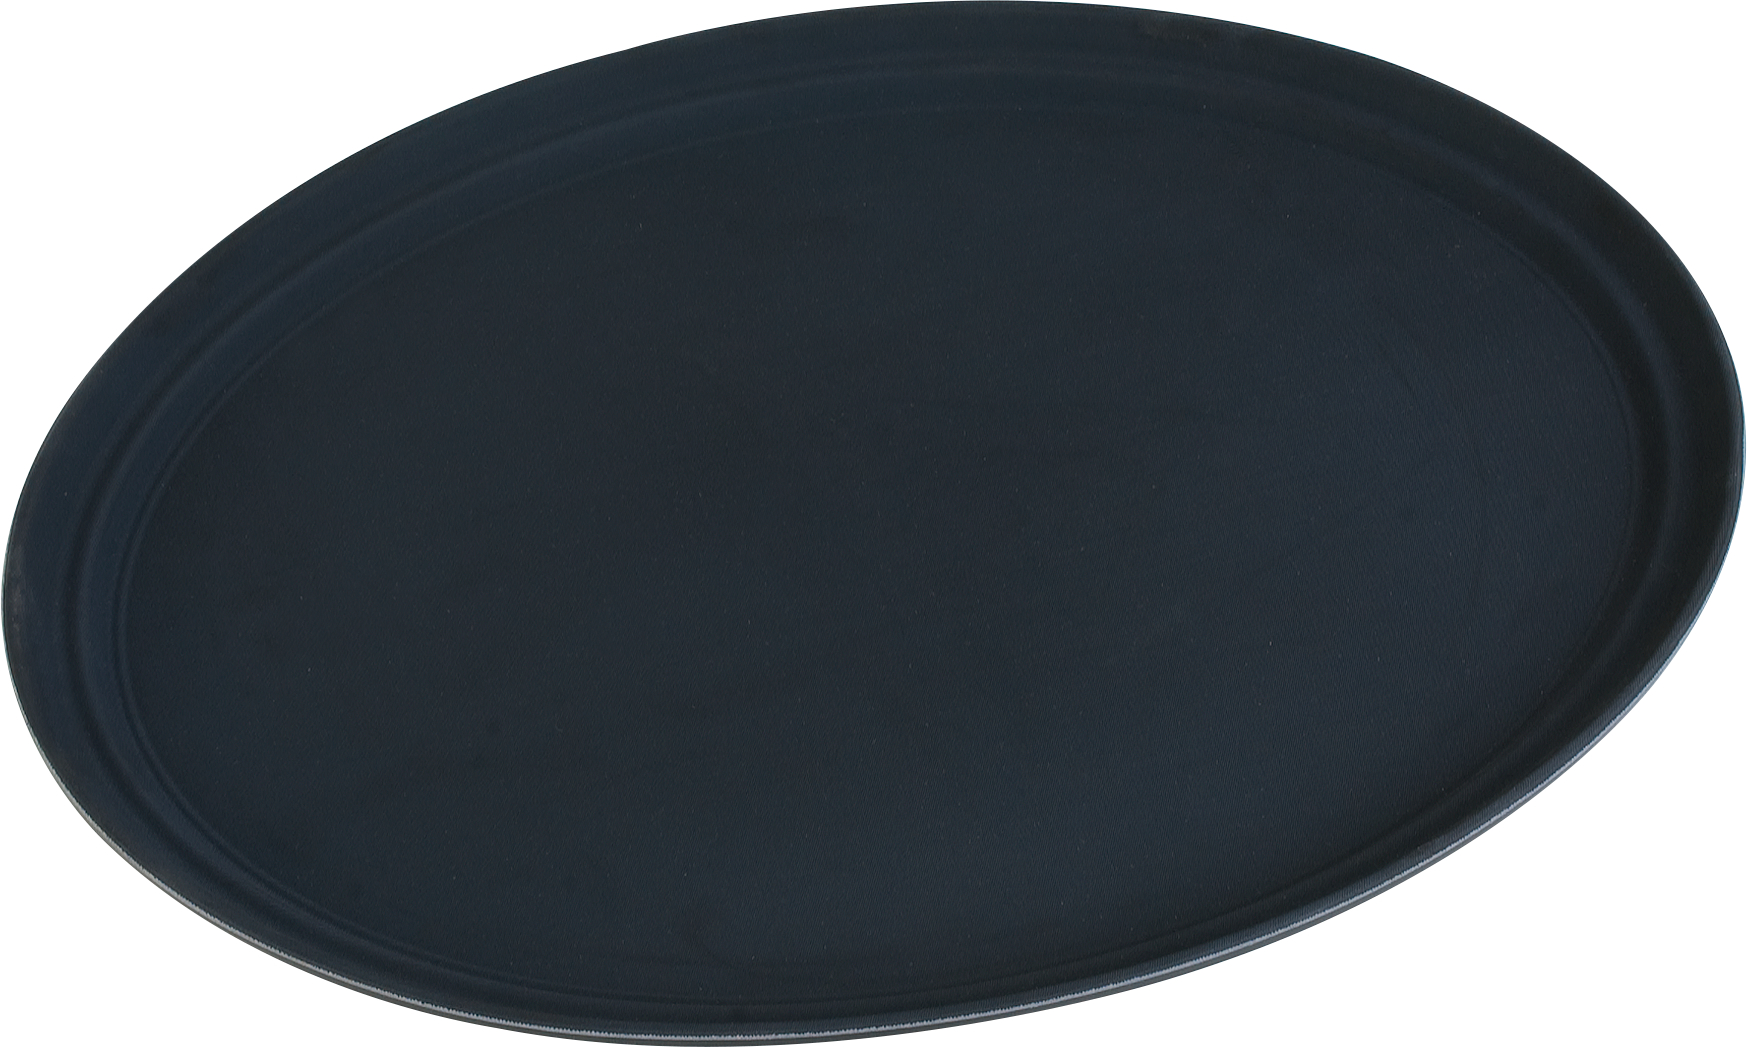 Truebasics Oval Grip Tray 25 x 20.5 - Black